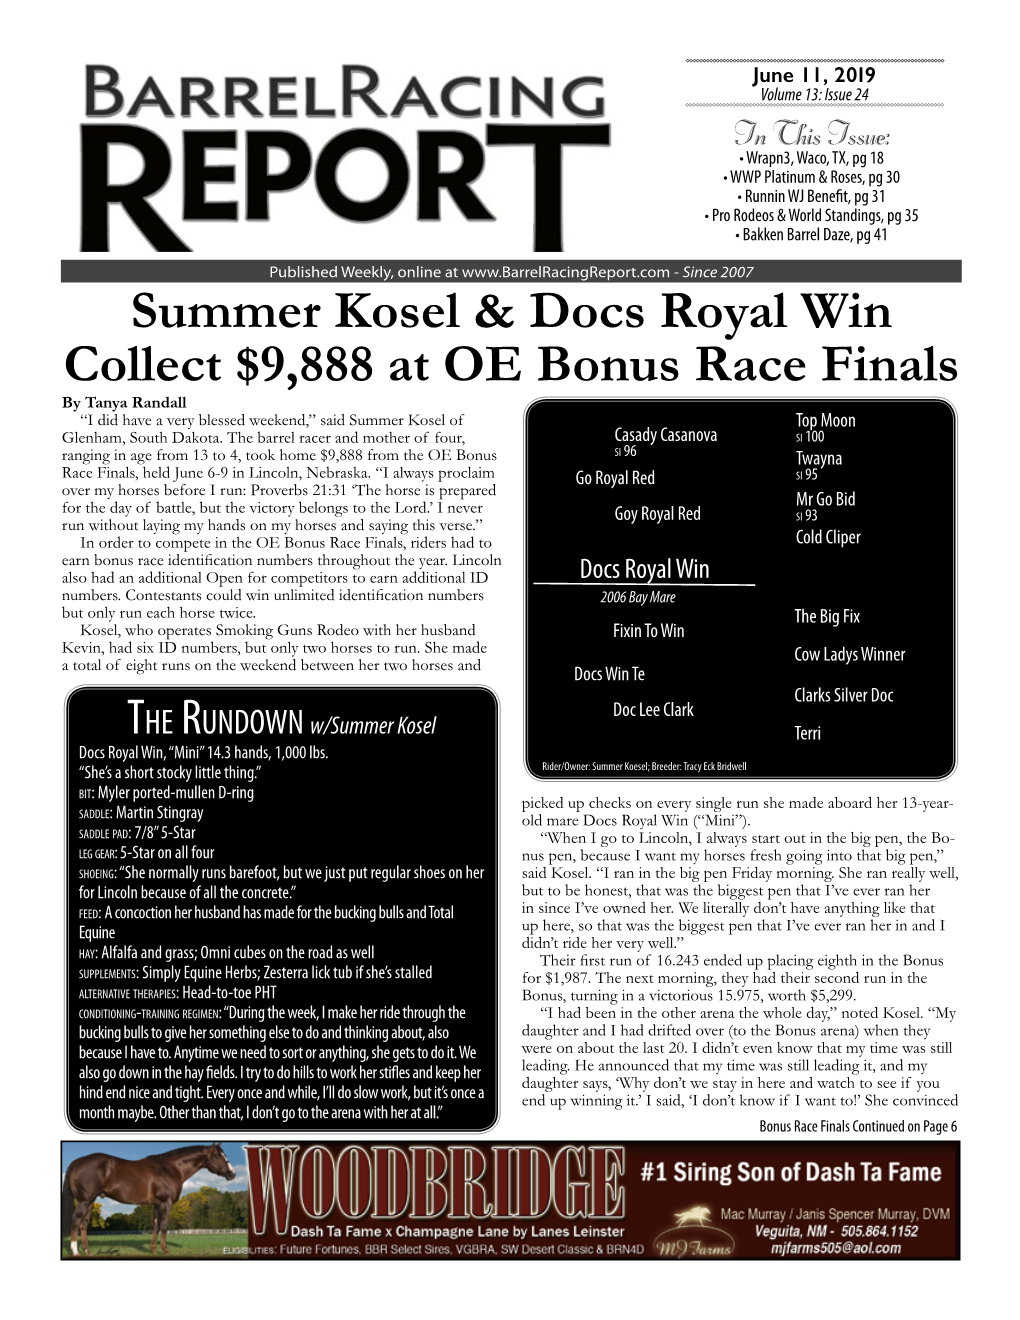 Summer Kosel & Docs Royal Win Collect $9,888 at OE Bonus Race Finals